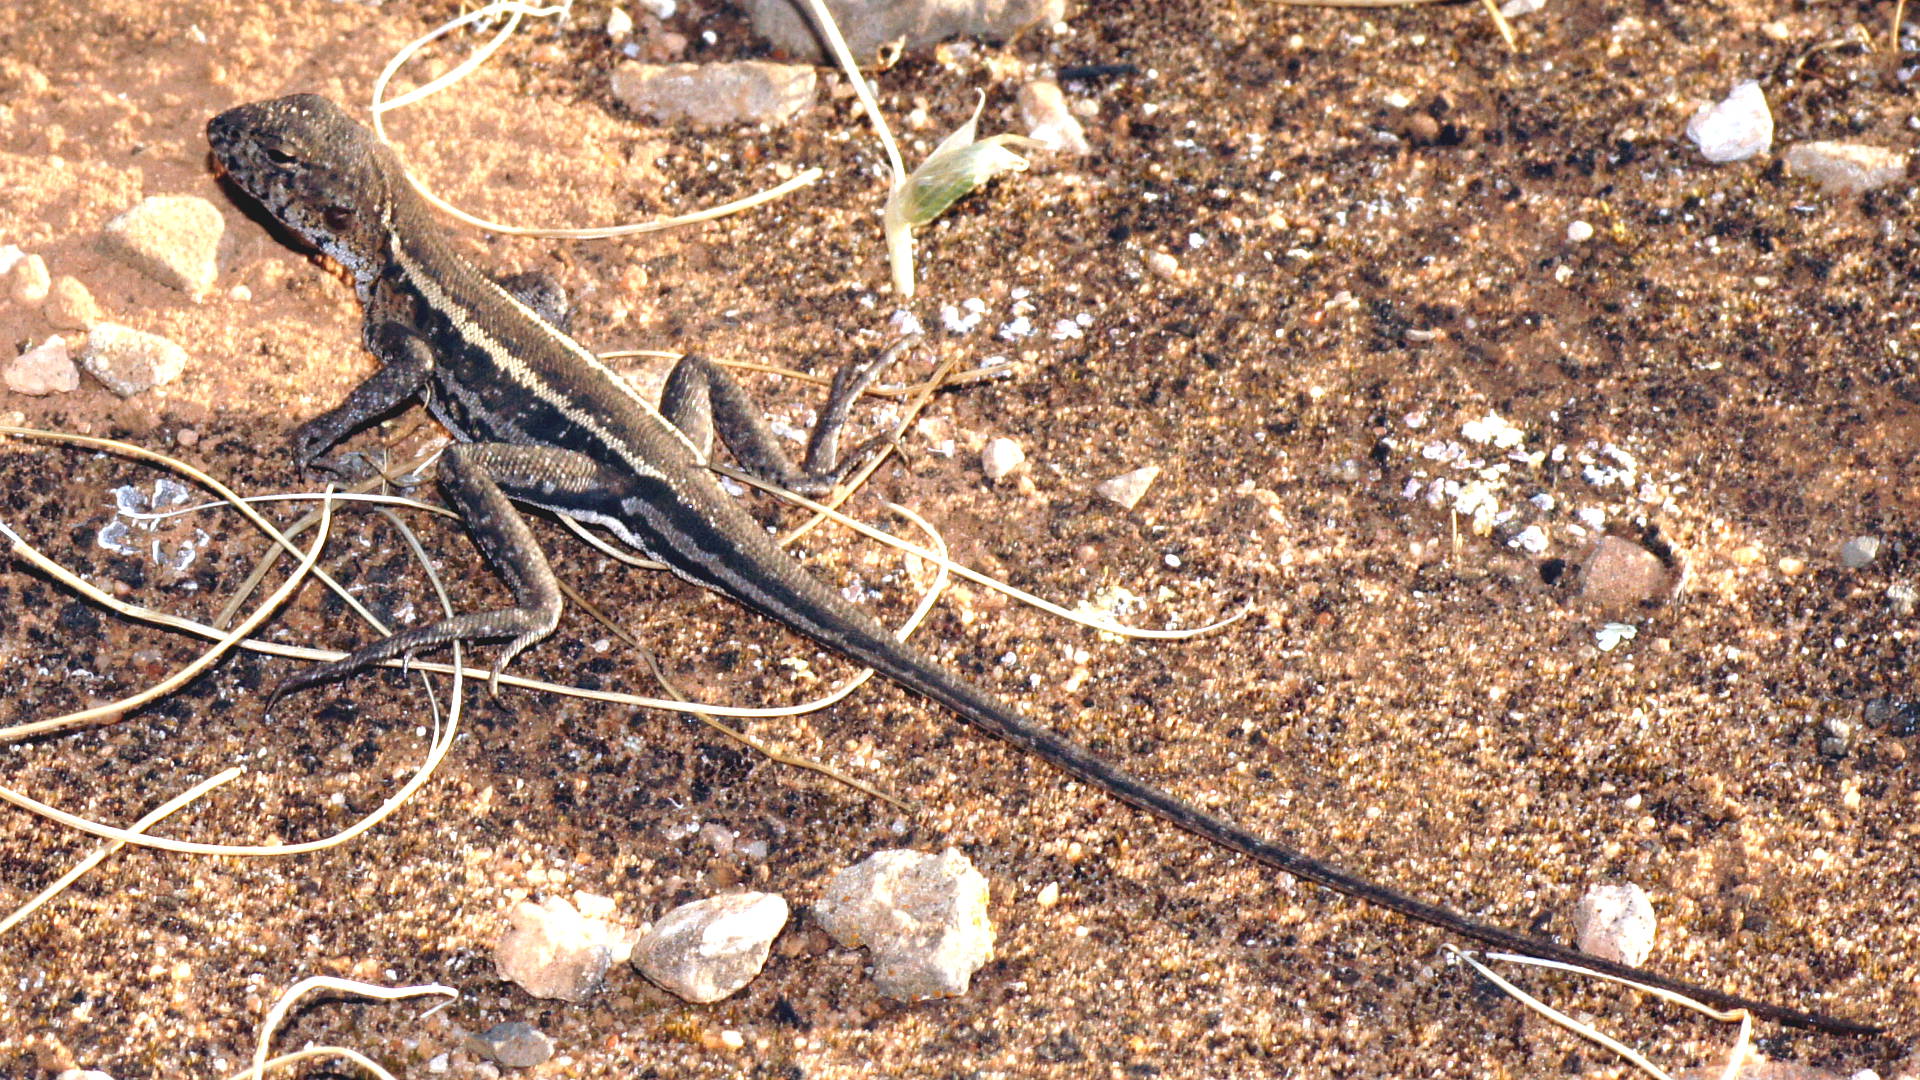 Triodia Dragon (Ctenophorus spinodomus)